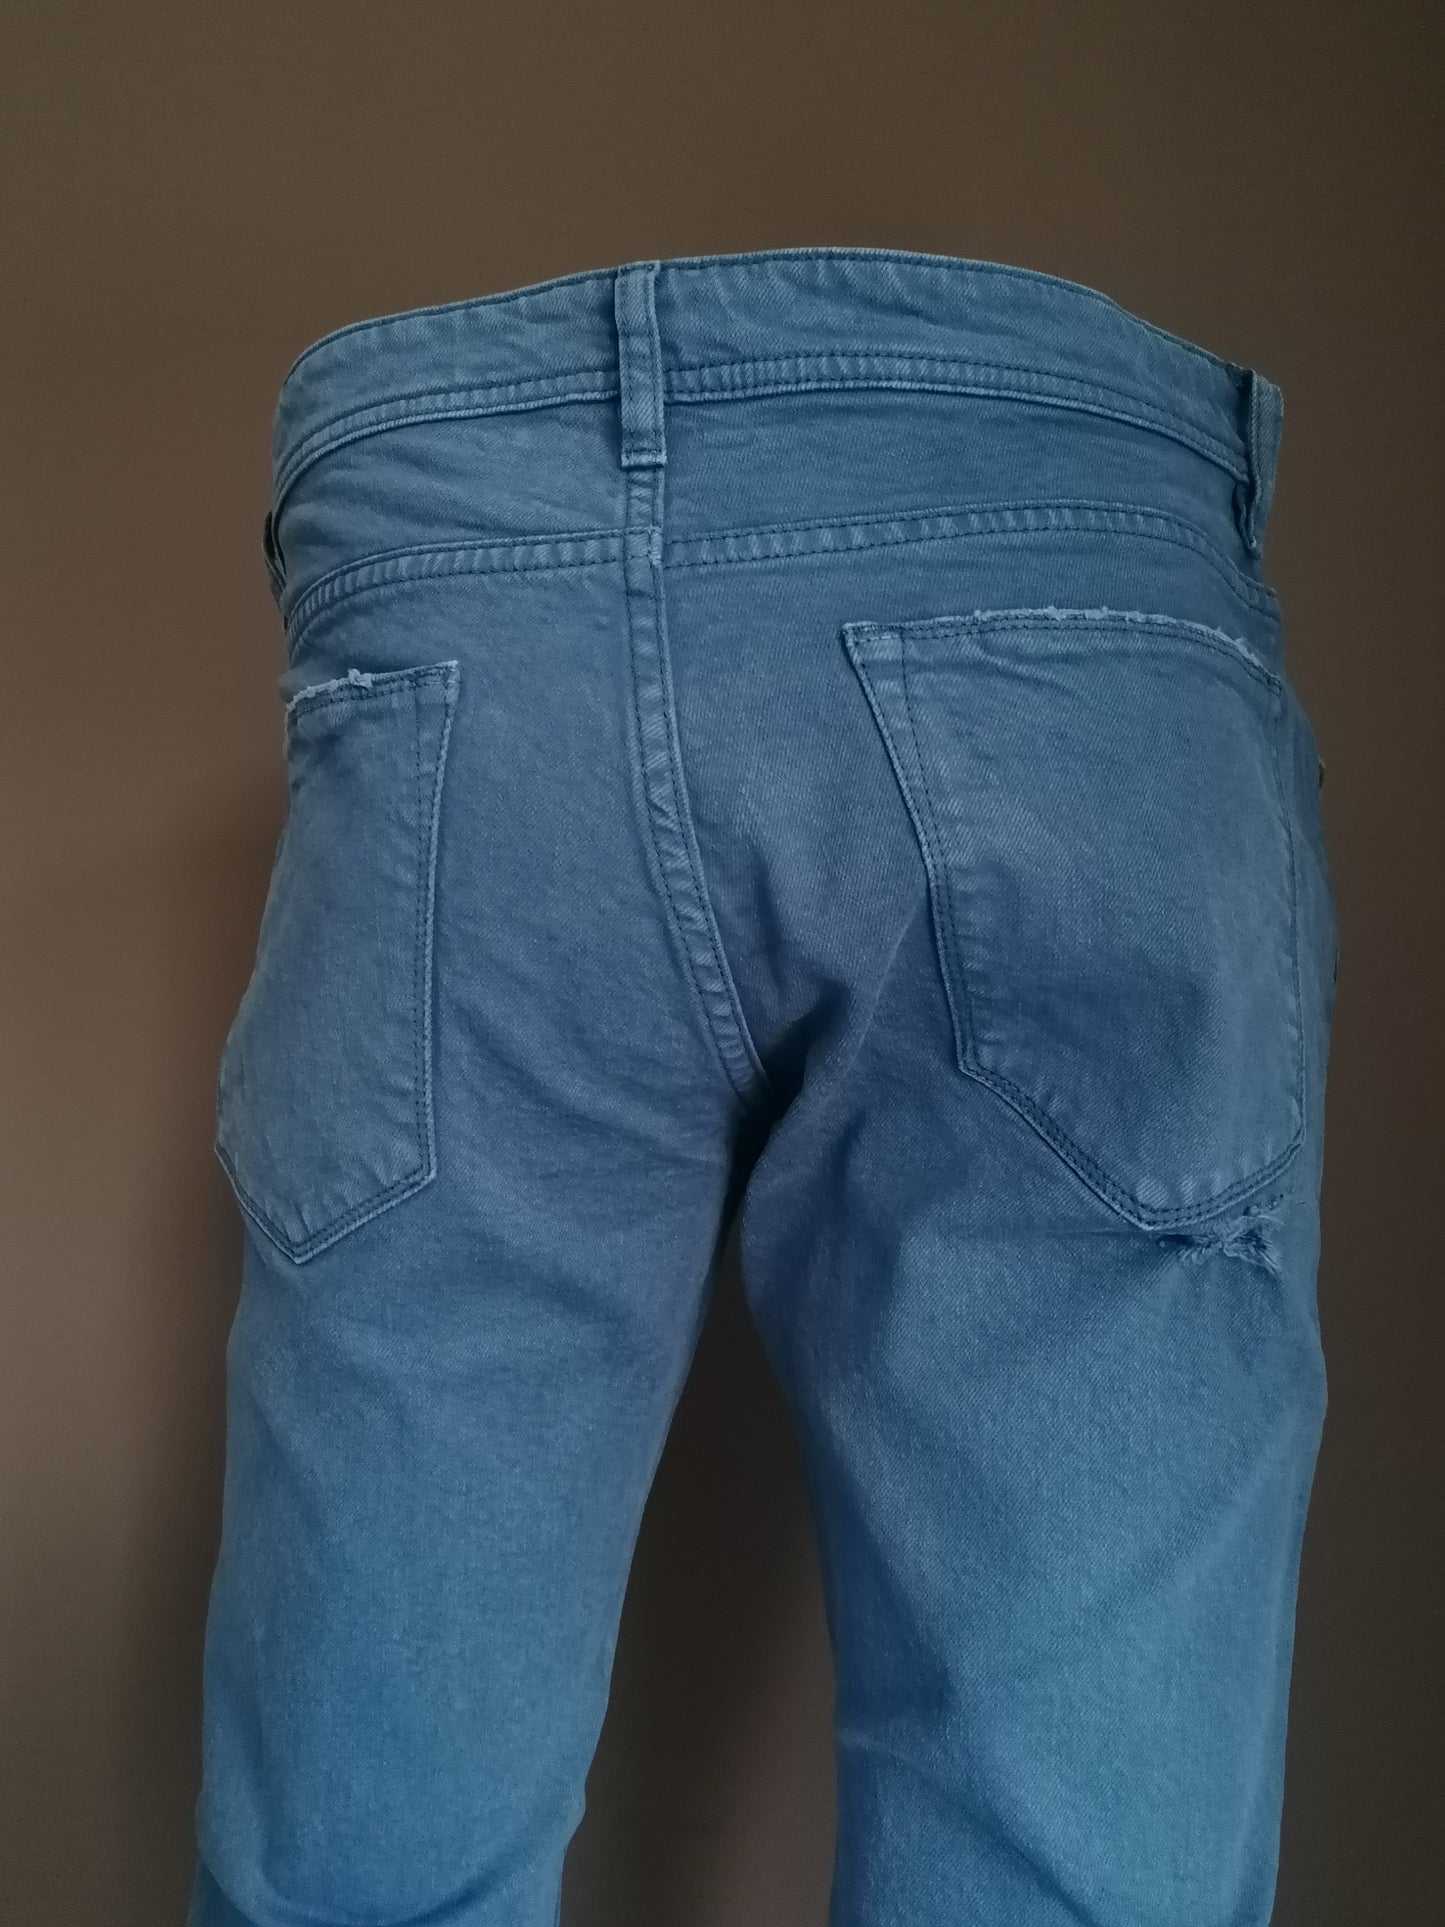 PGT Ripped Jeans. Couleur bleue. Taille W32 - L32.